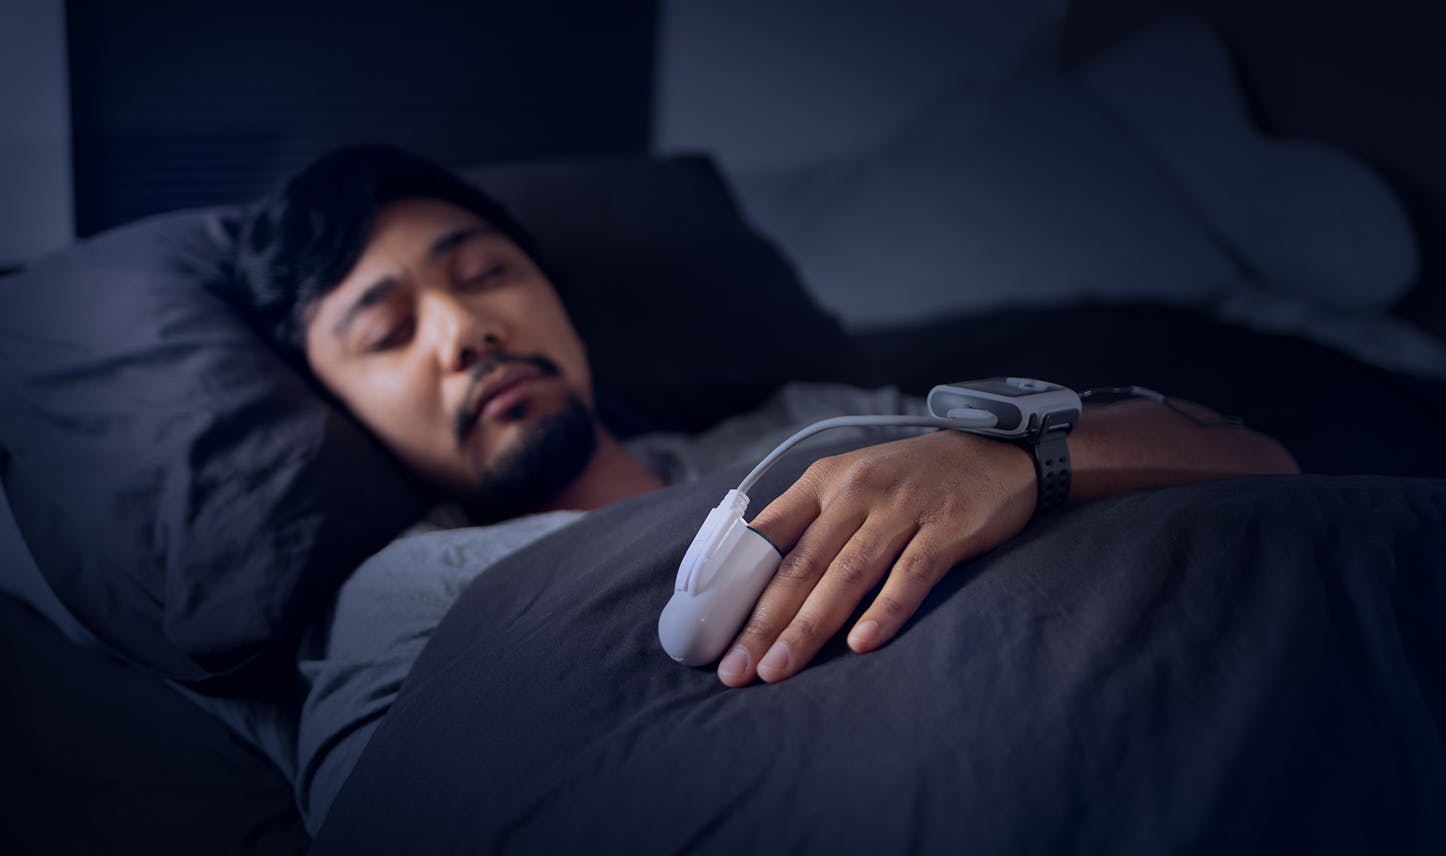 sleeping with device on hand